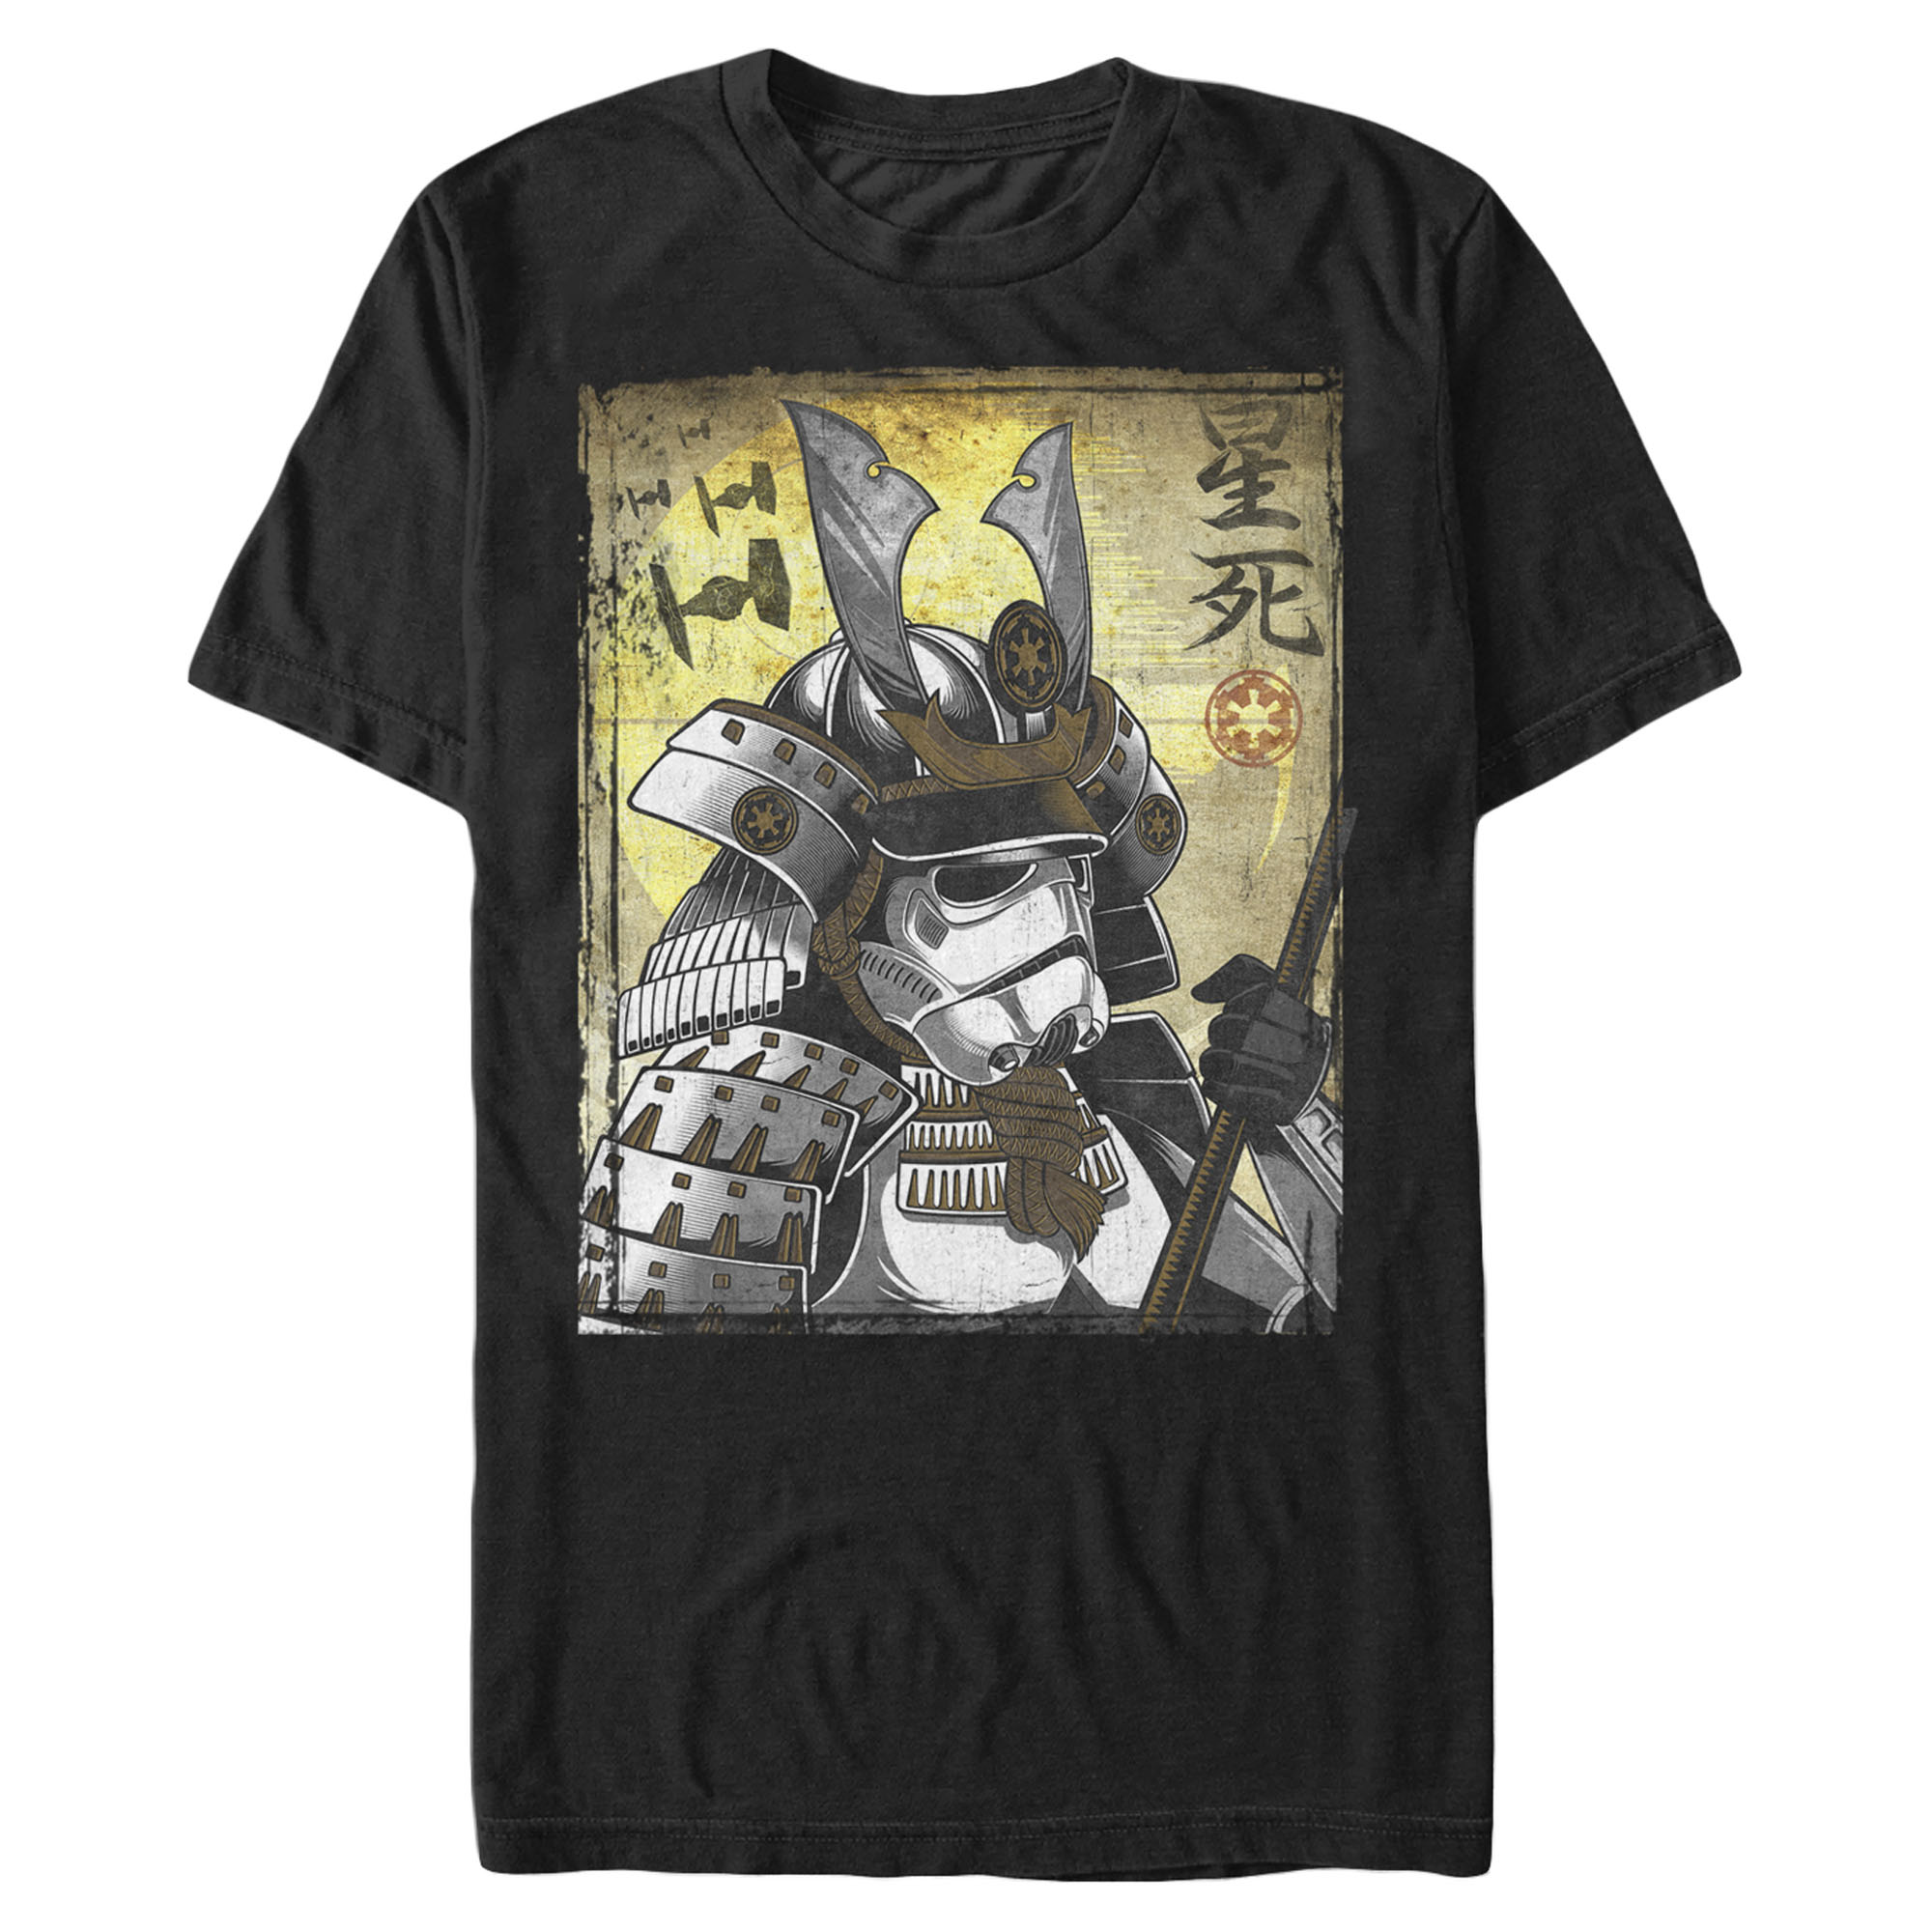 Men's Star Wars Samurai Stormtrooper  Graphic Tee Black 4X Large - image 1 of 5